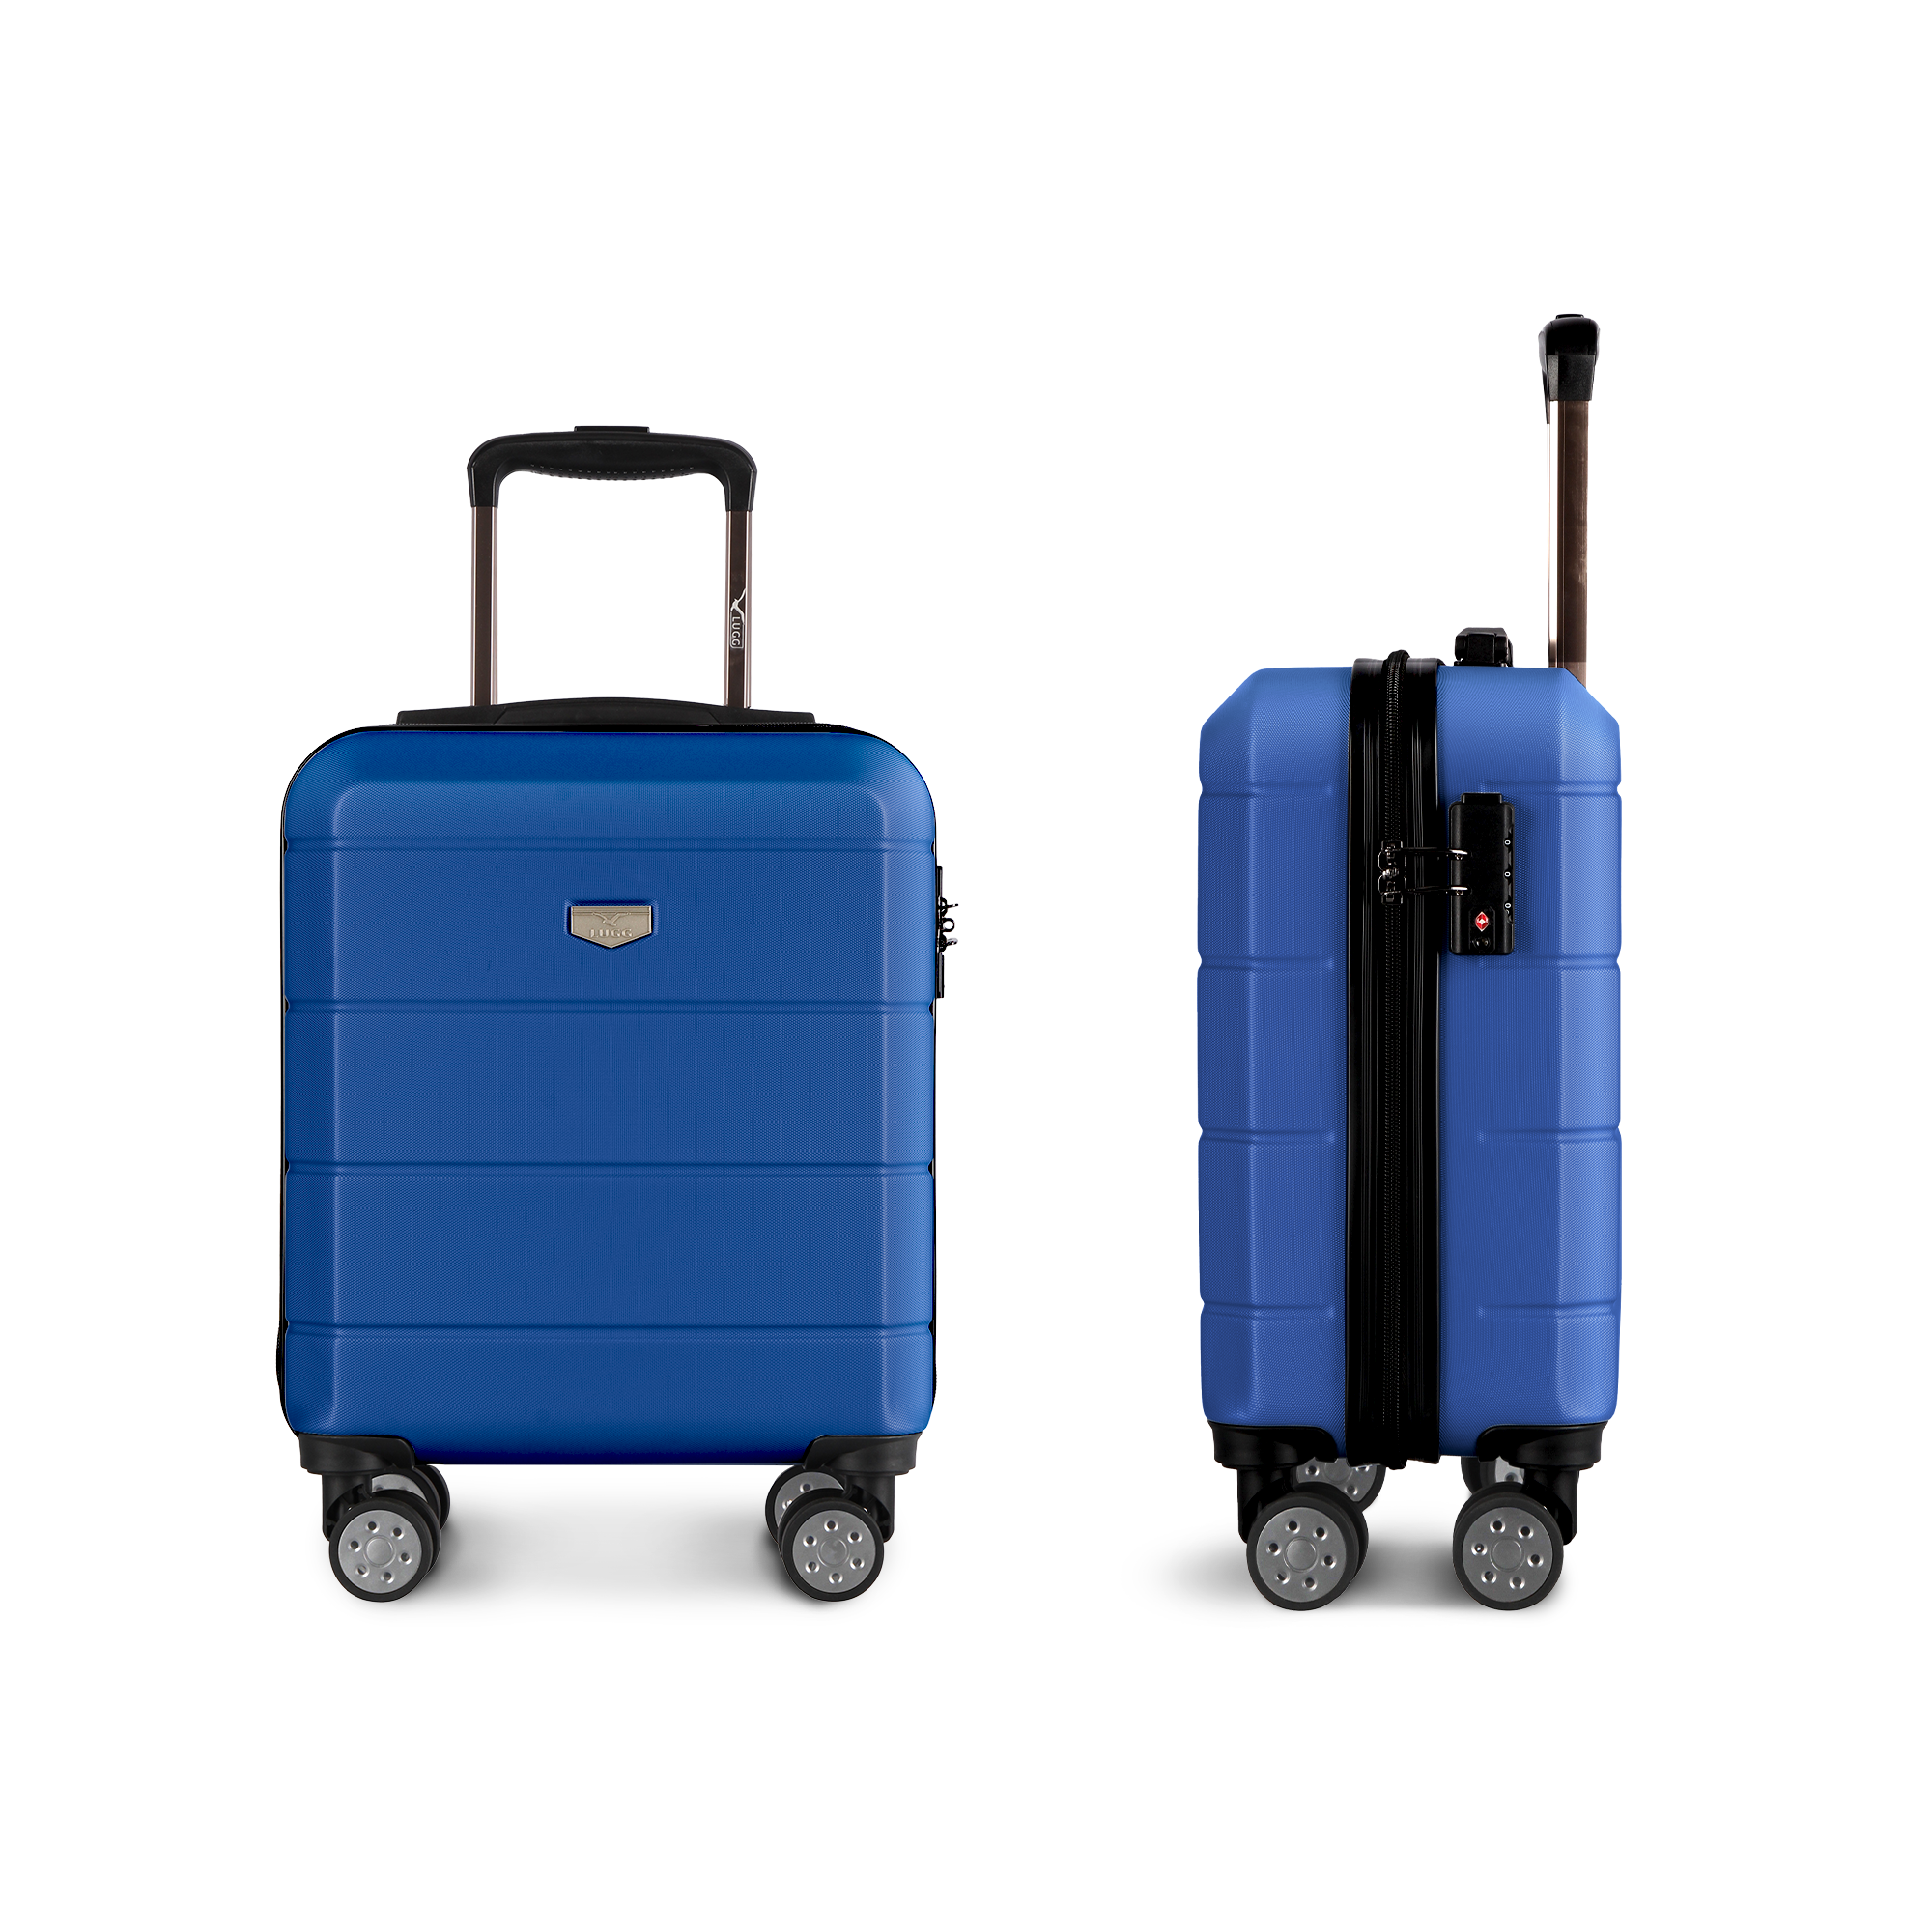 Jetset Cabin Suitcase in Blue